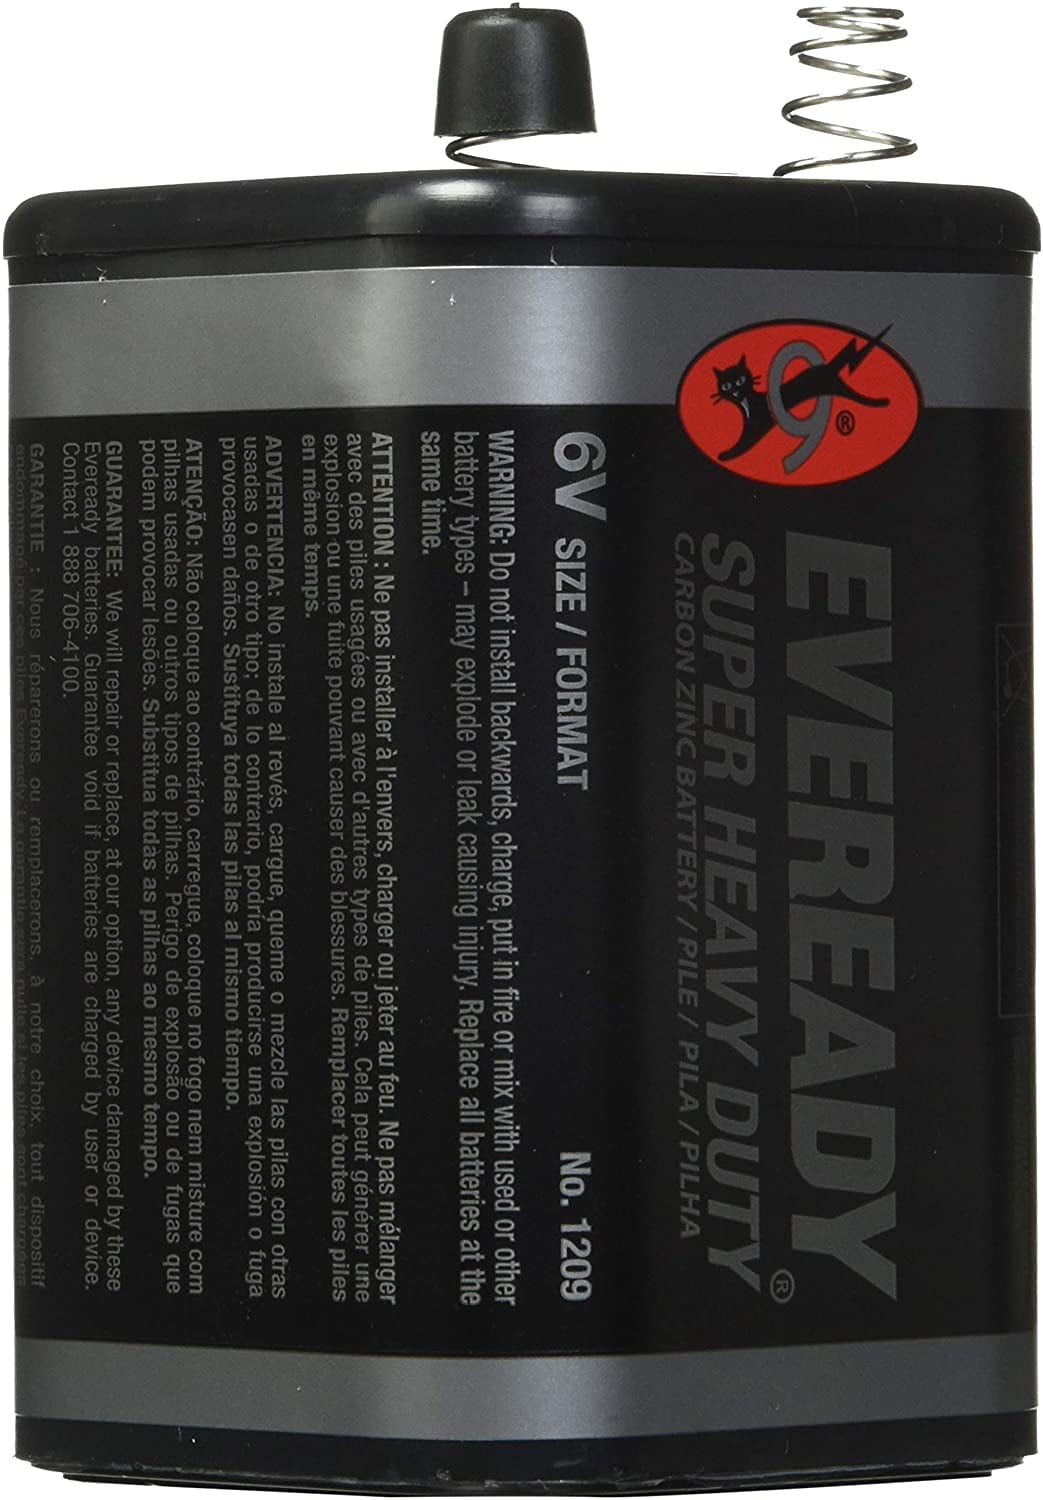 Eveready Batteries - 6 Volt Lantern Battery - 1209 - Tessco